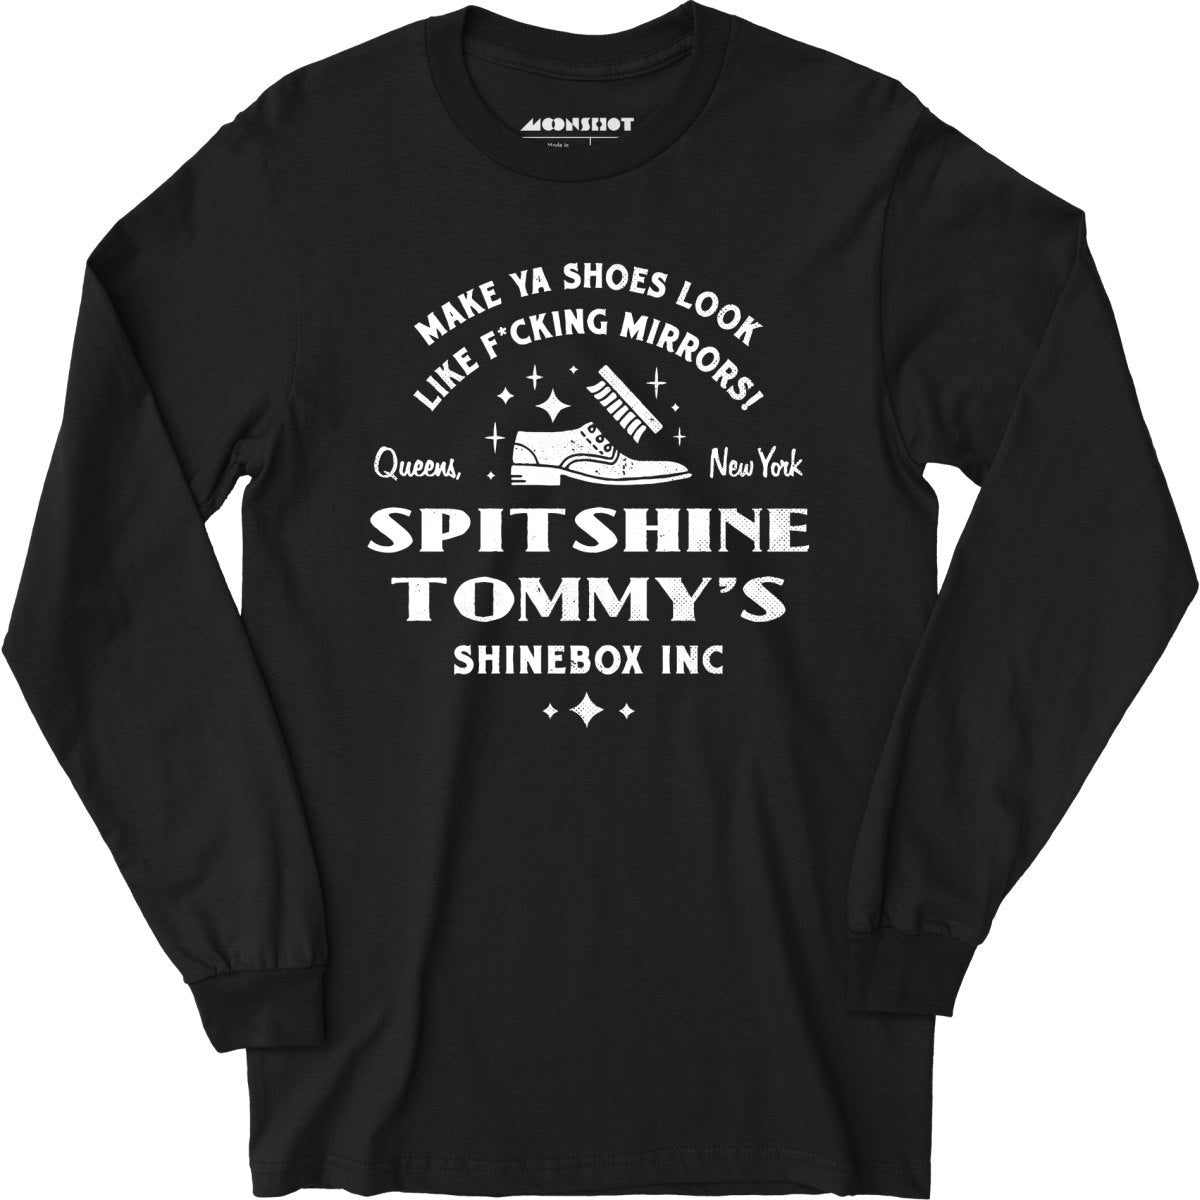 Spitshine Tommy's Shinebox Inc. - Long Sleeve T-Shirt